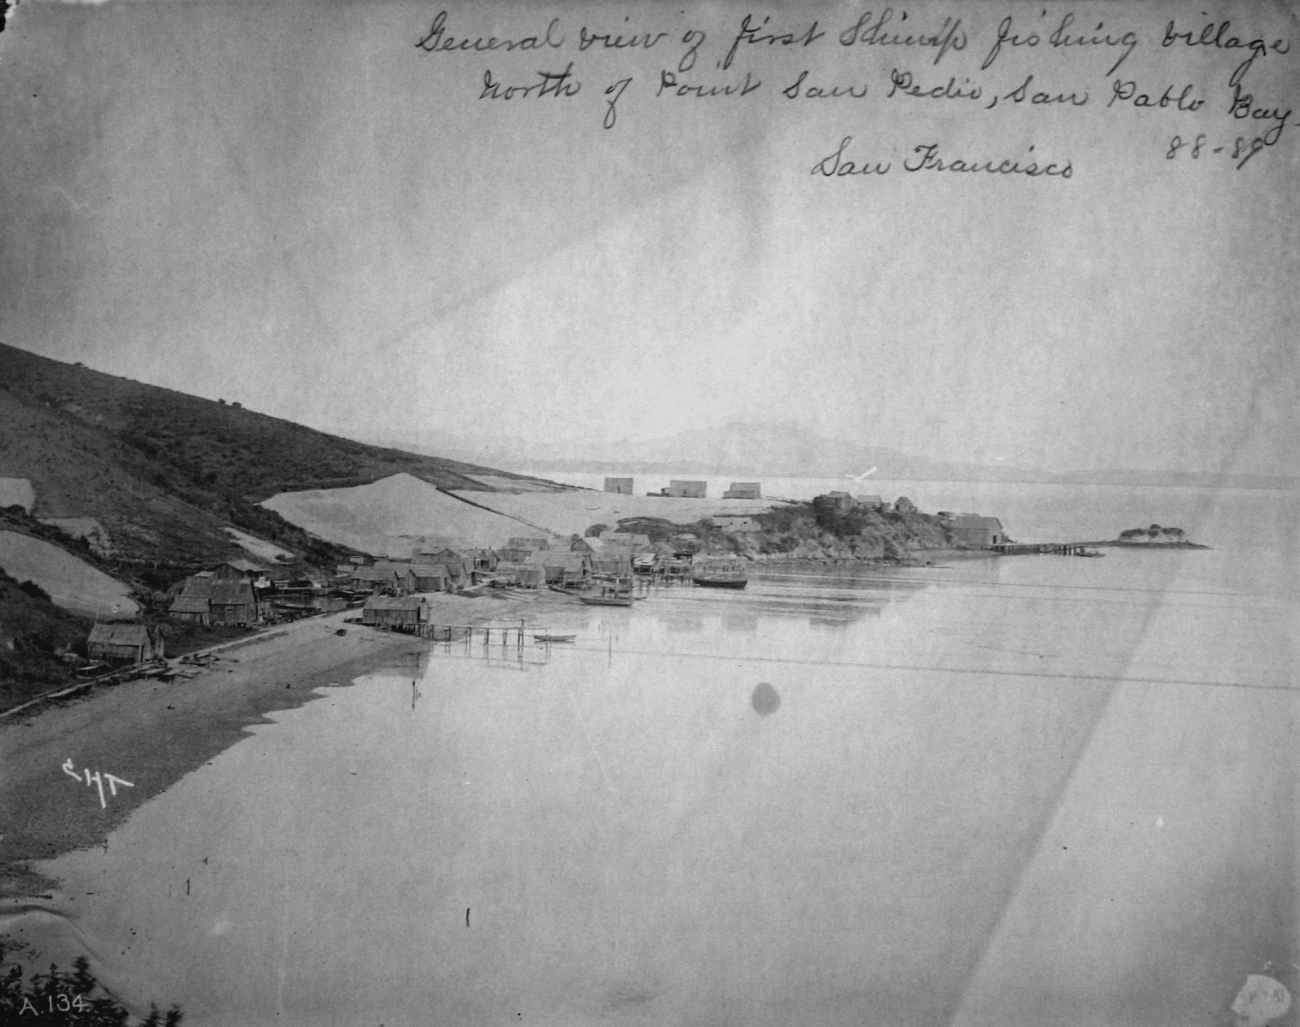 General view of first shrimp fishing village north of Point San Pedro,San Pablo Bay, San Francisco, CA, 1888-89